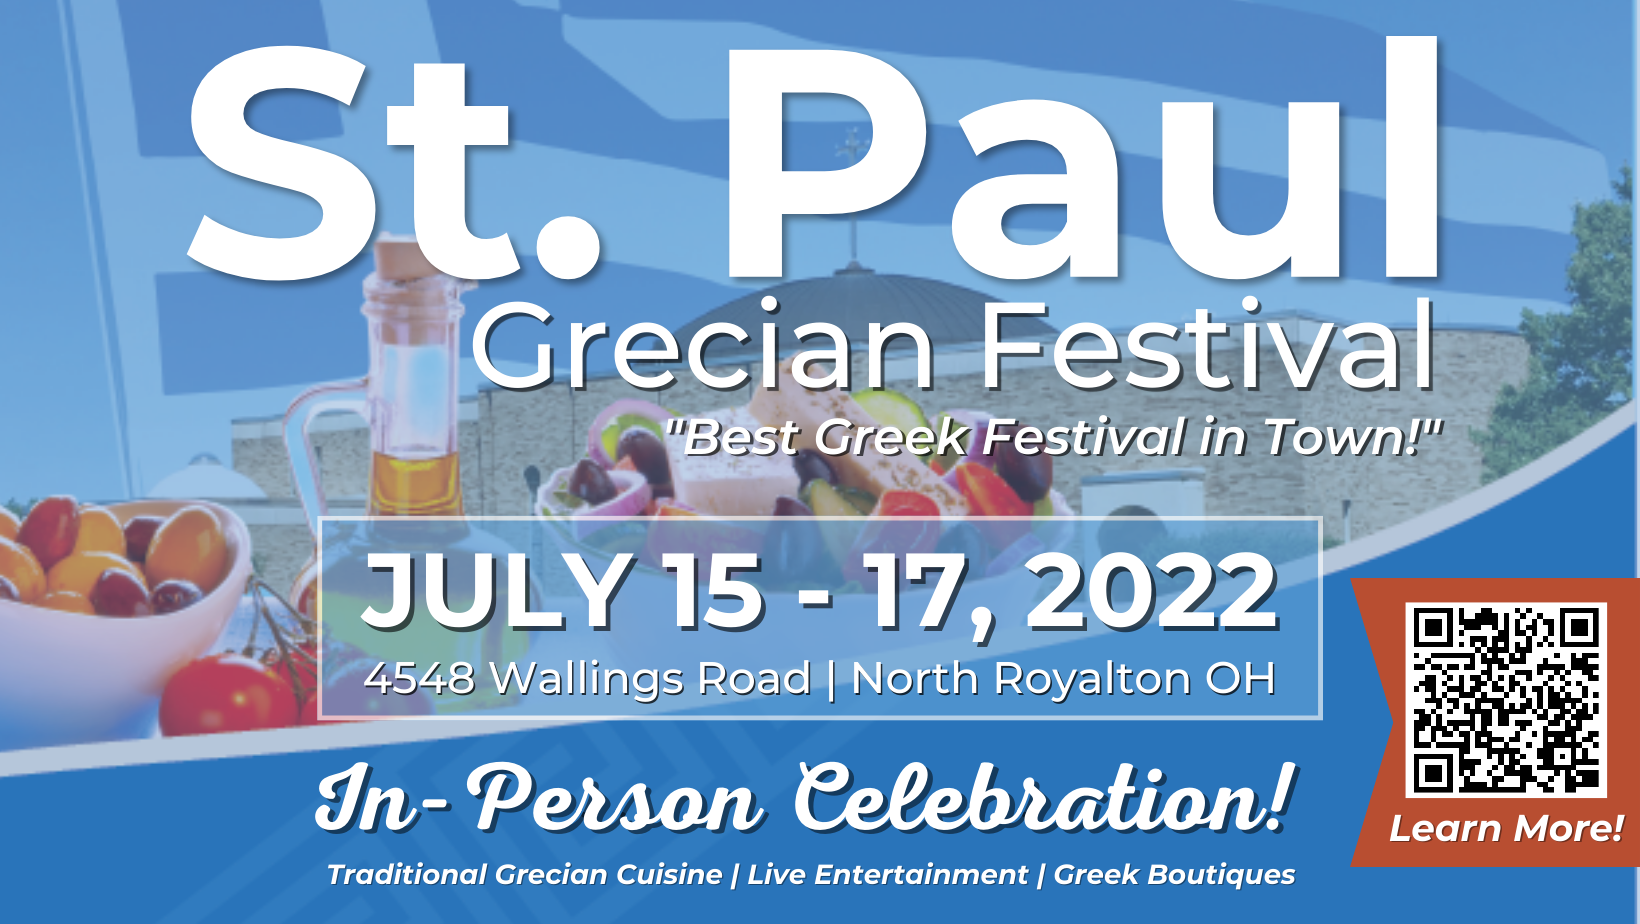 About the Grecian Festival St. Paul Greek Orthodox Church